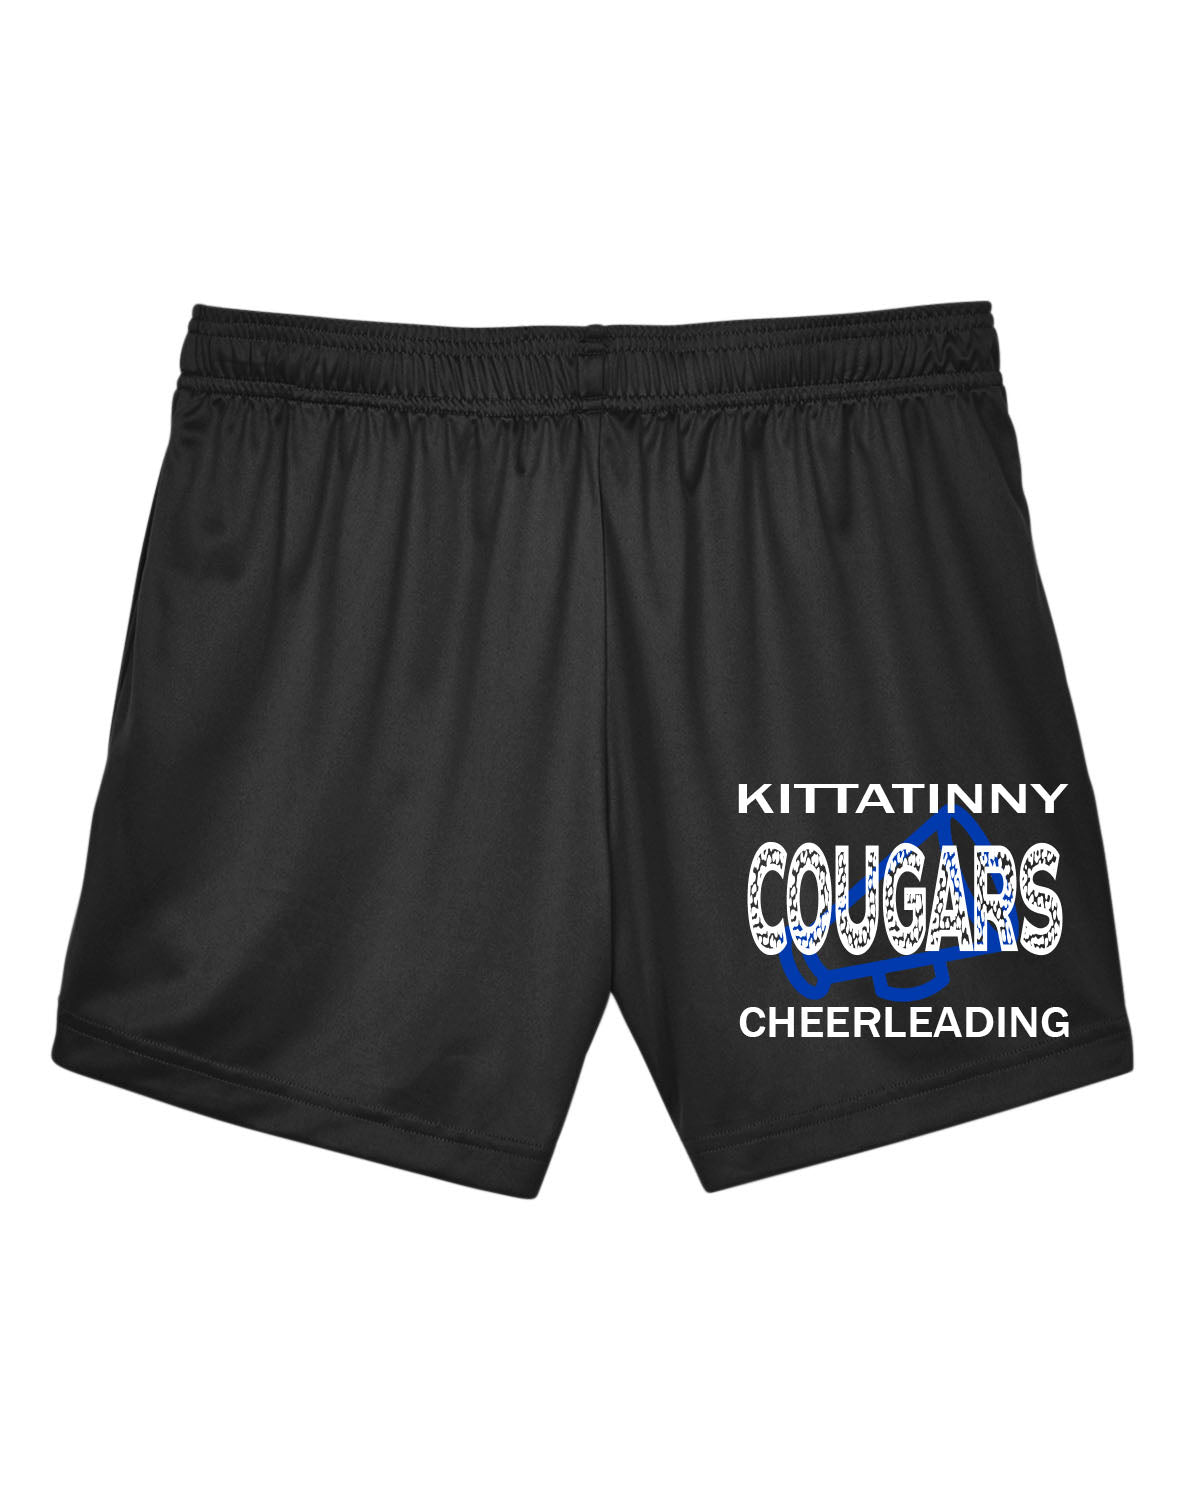 Kittatinny Cheer Ladies Performance Design 10 Shorts